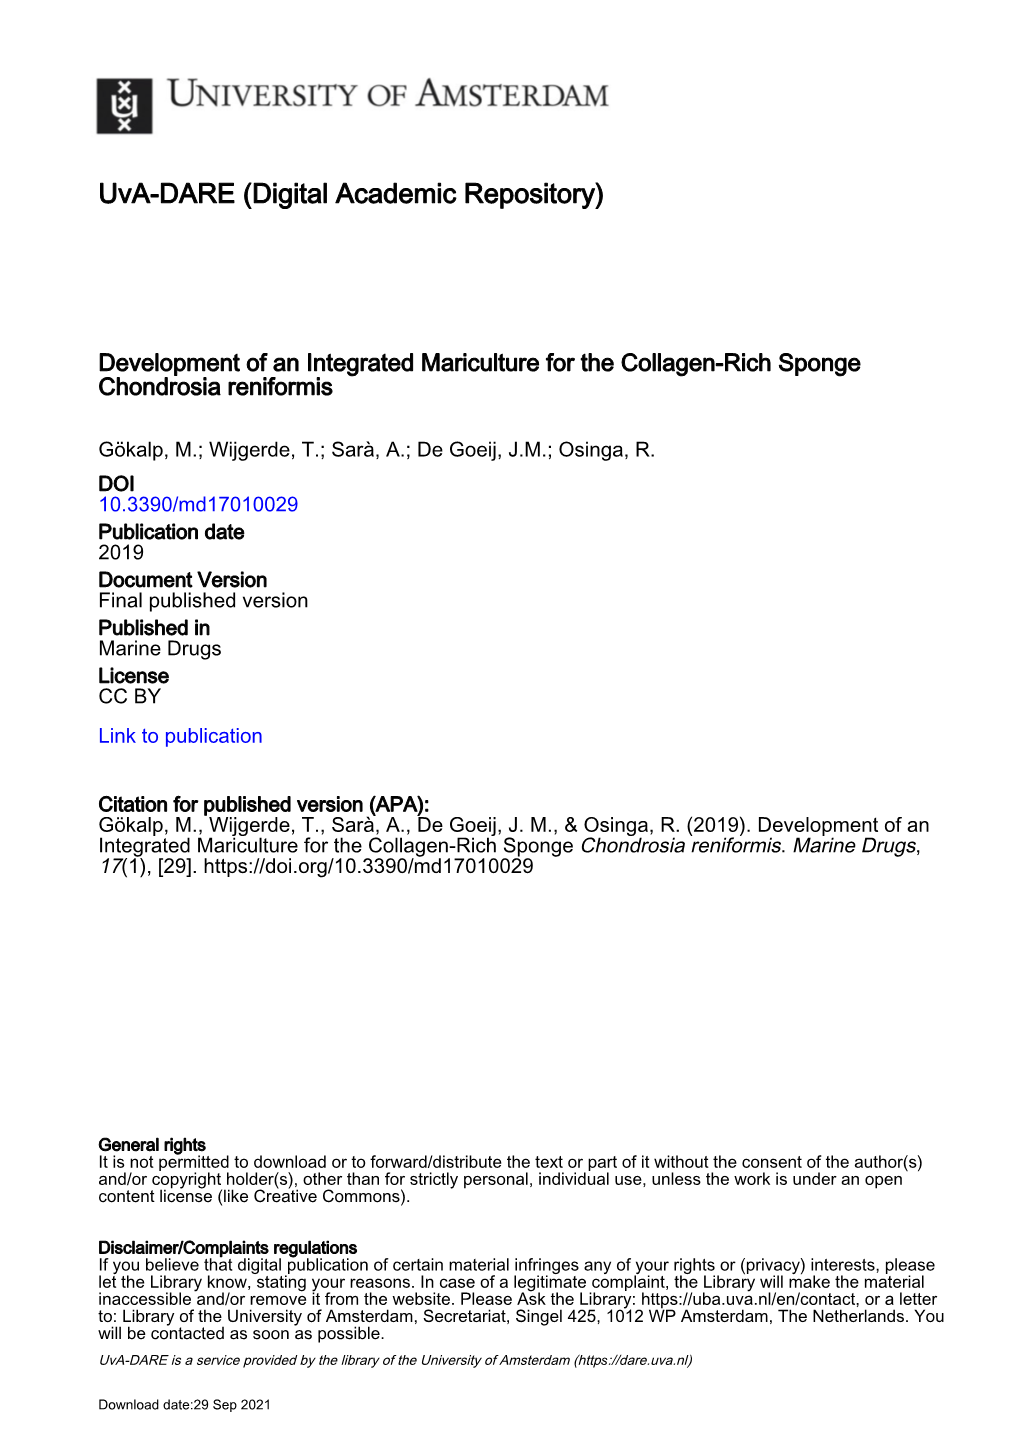 Development of an Integrated Mariculture for the Collagen-Rich Sponge Chondrosia Reniformis